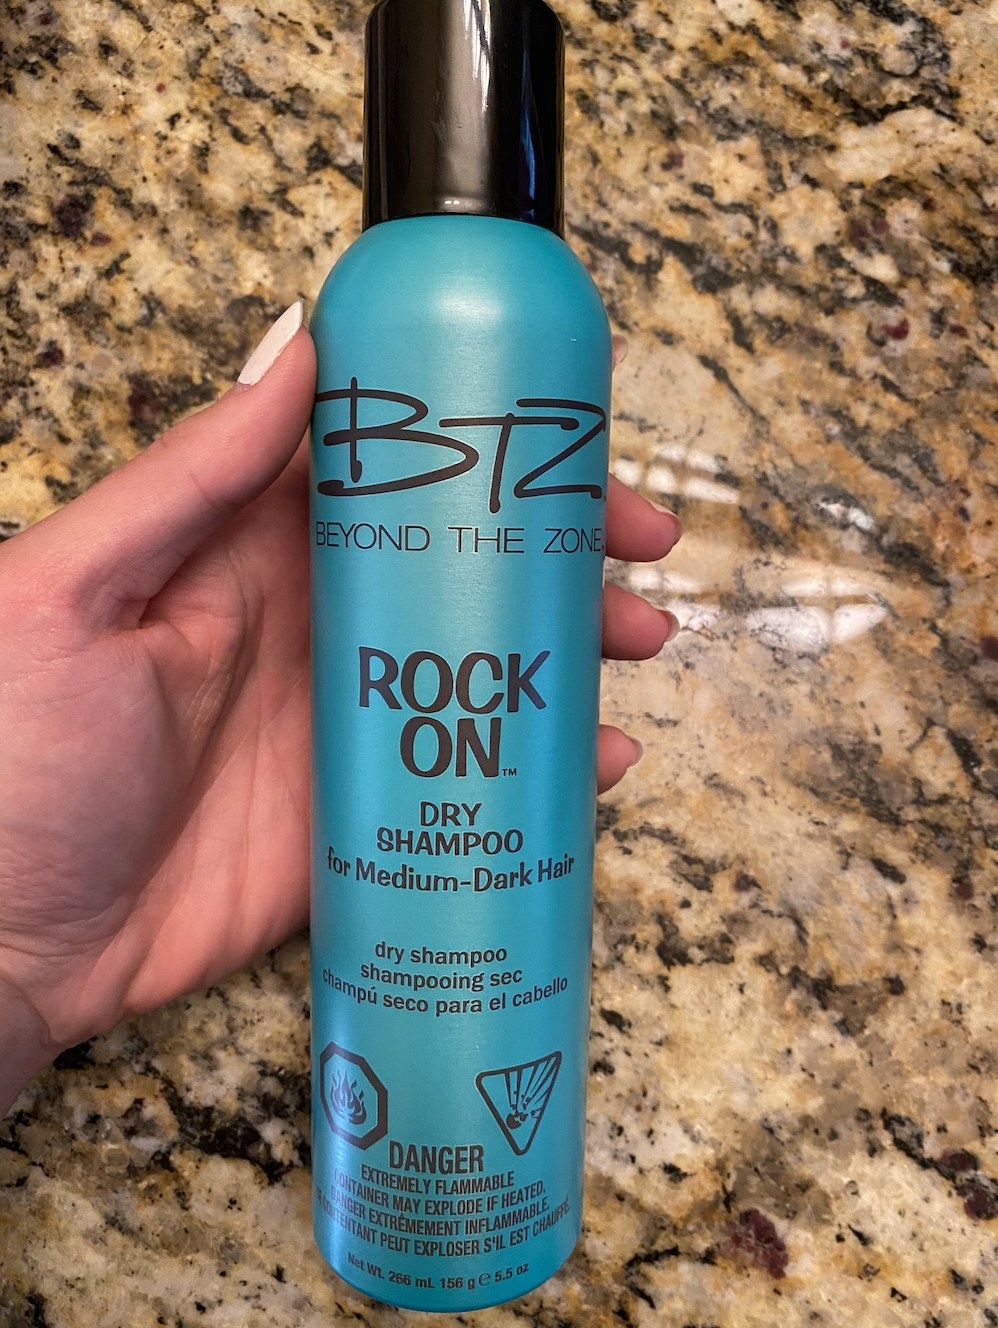 BTZ dry shampoo